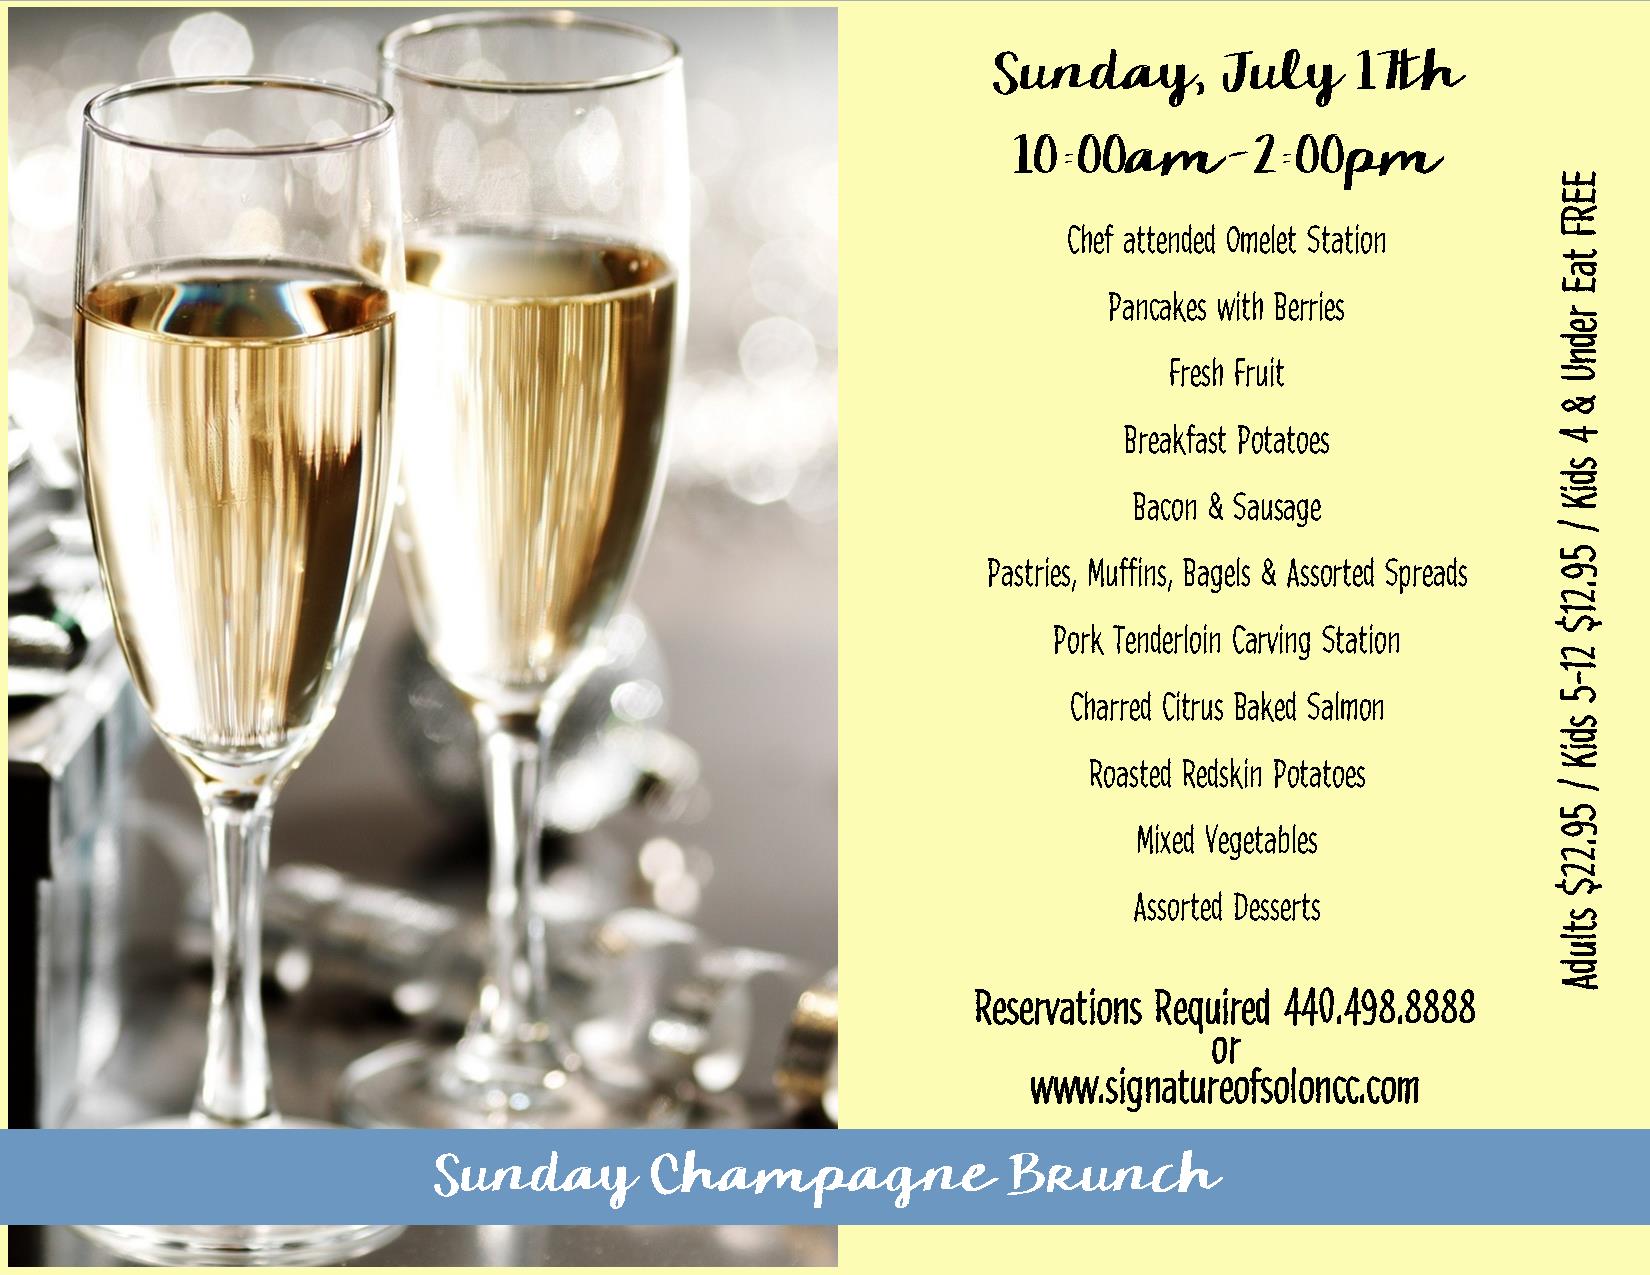 Sunday Champagne Brunch | Signature of Solon | Sunday, July 17, 2016